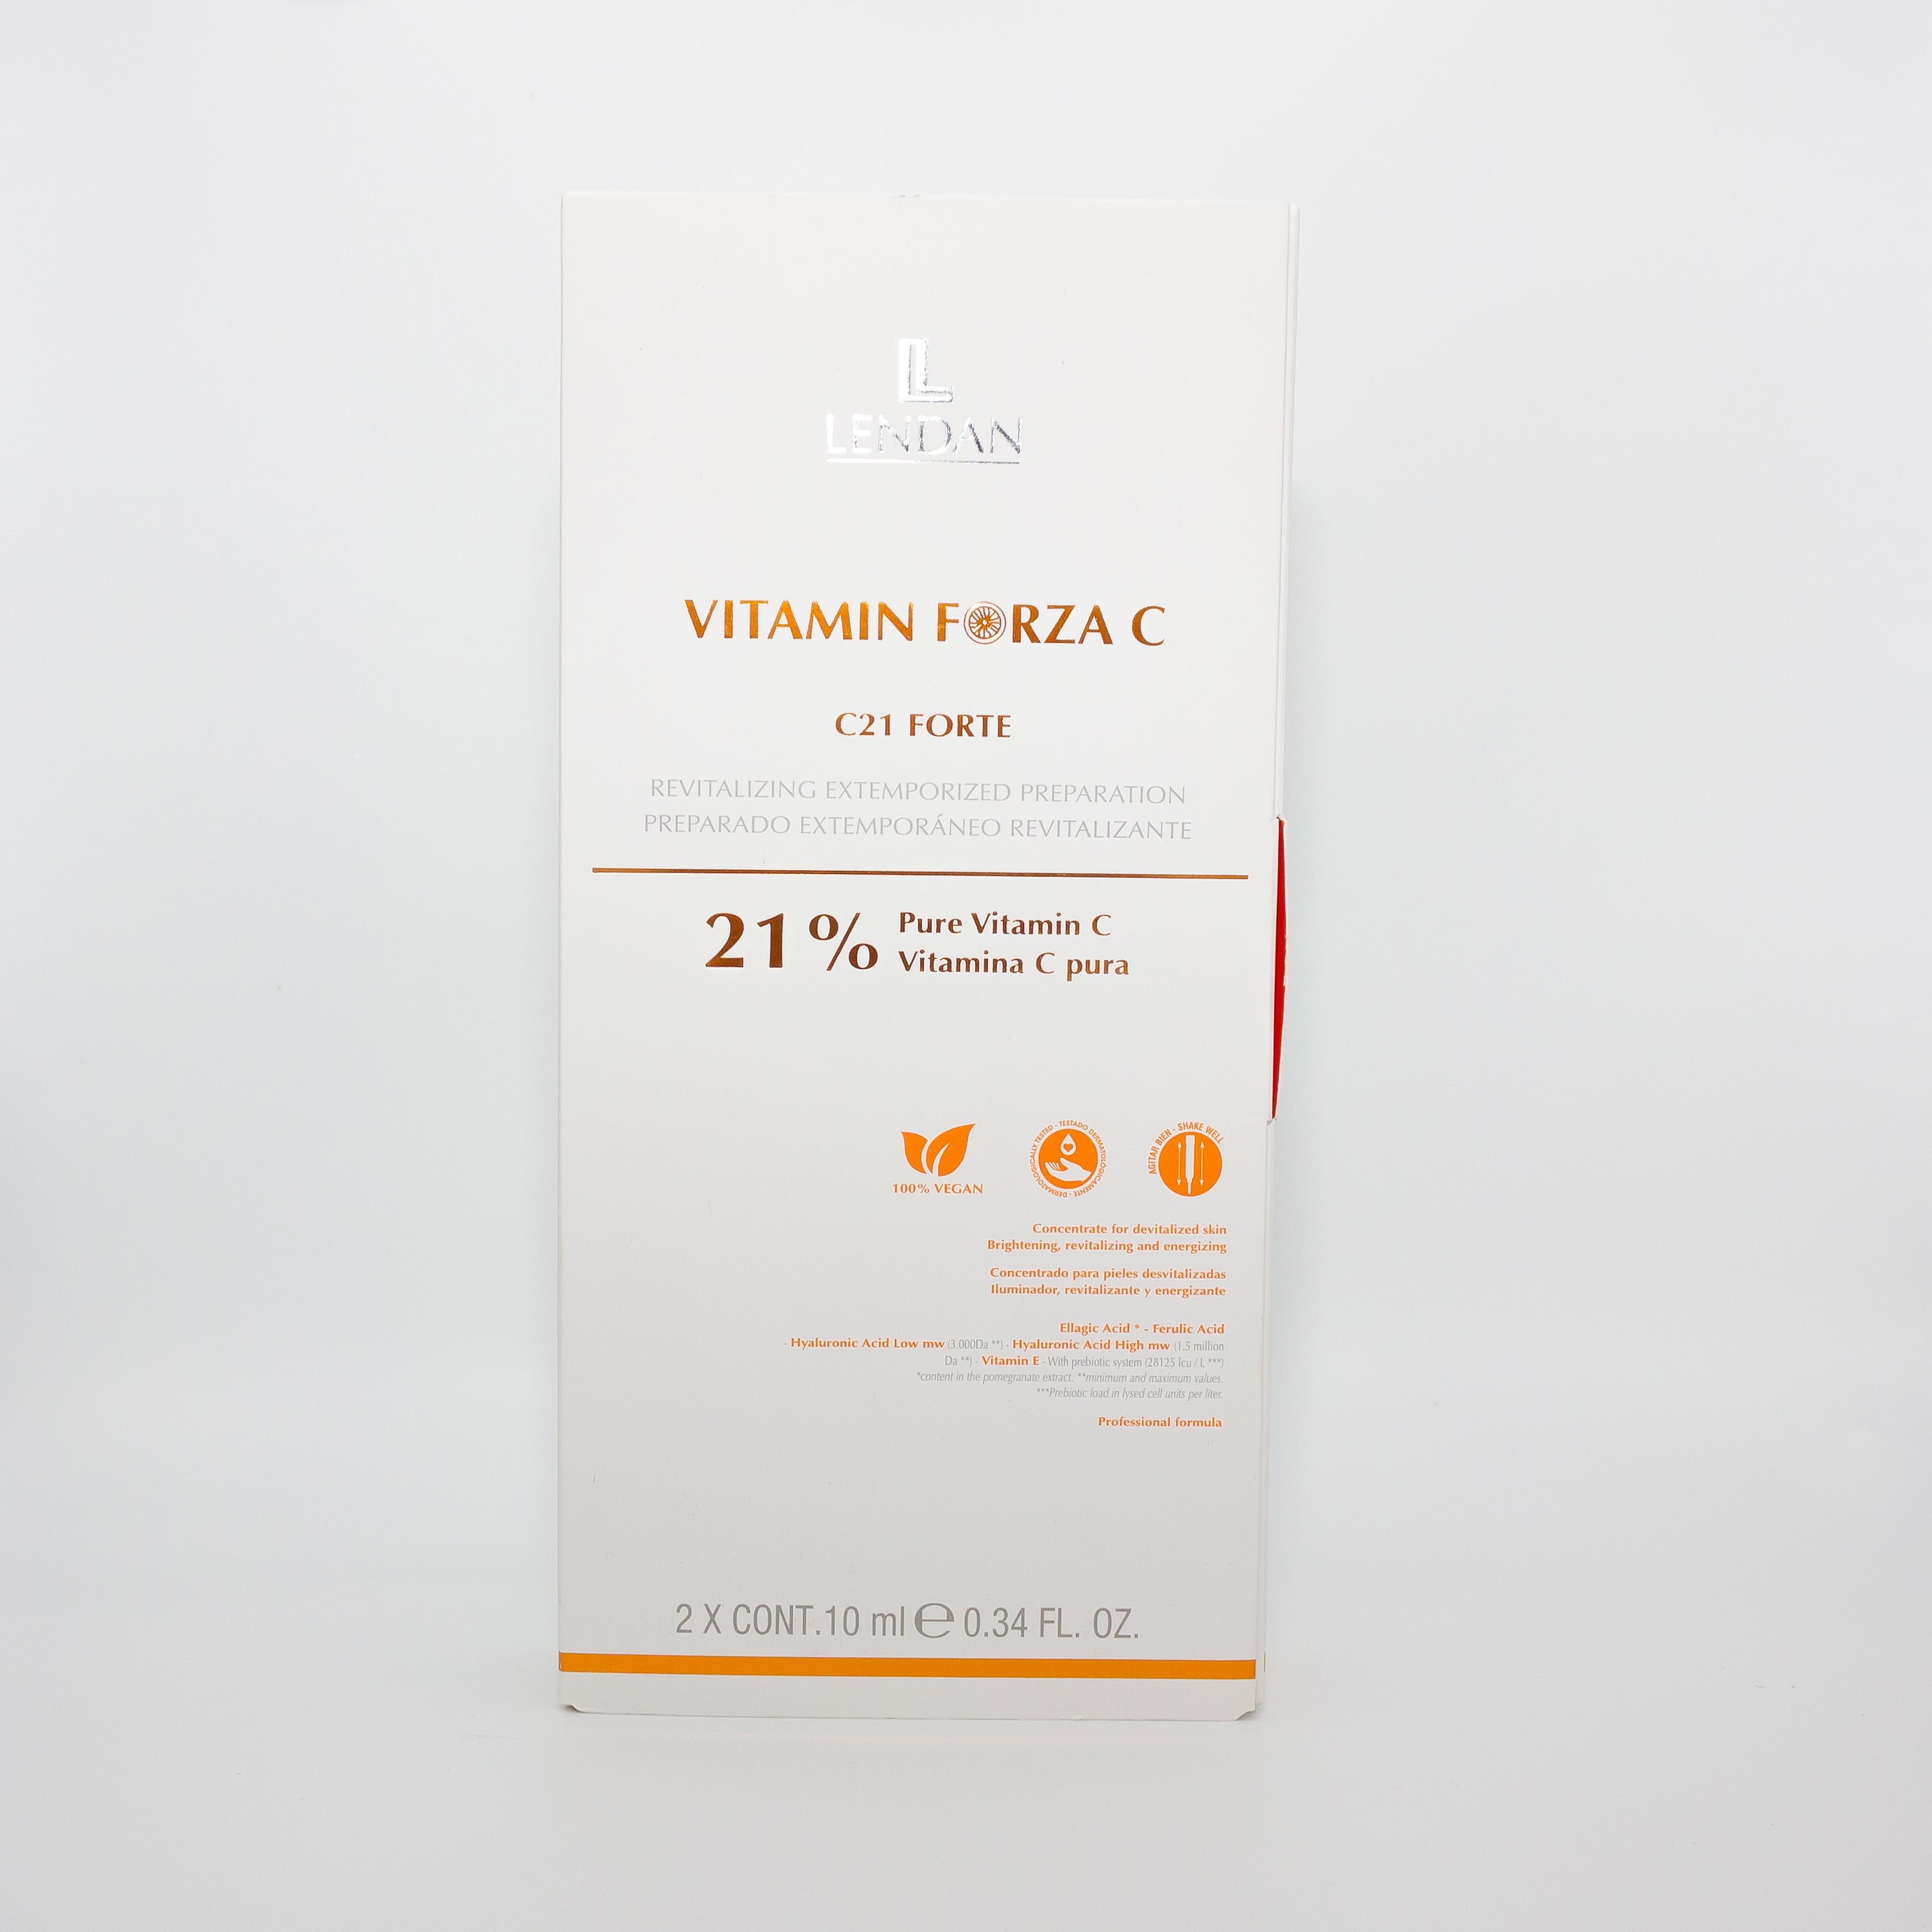 Crema nutritiva facial - Vitamina C - Lendan